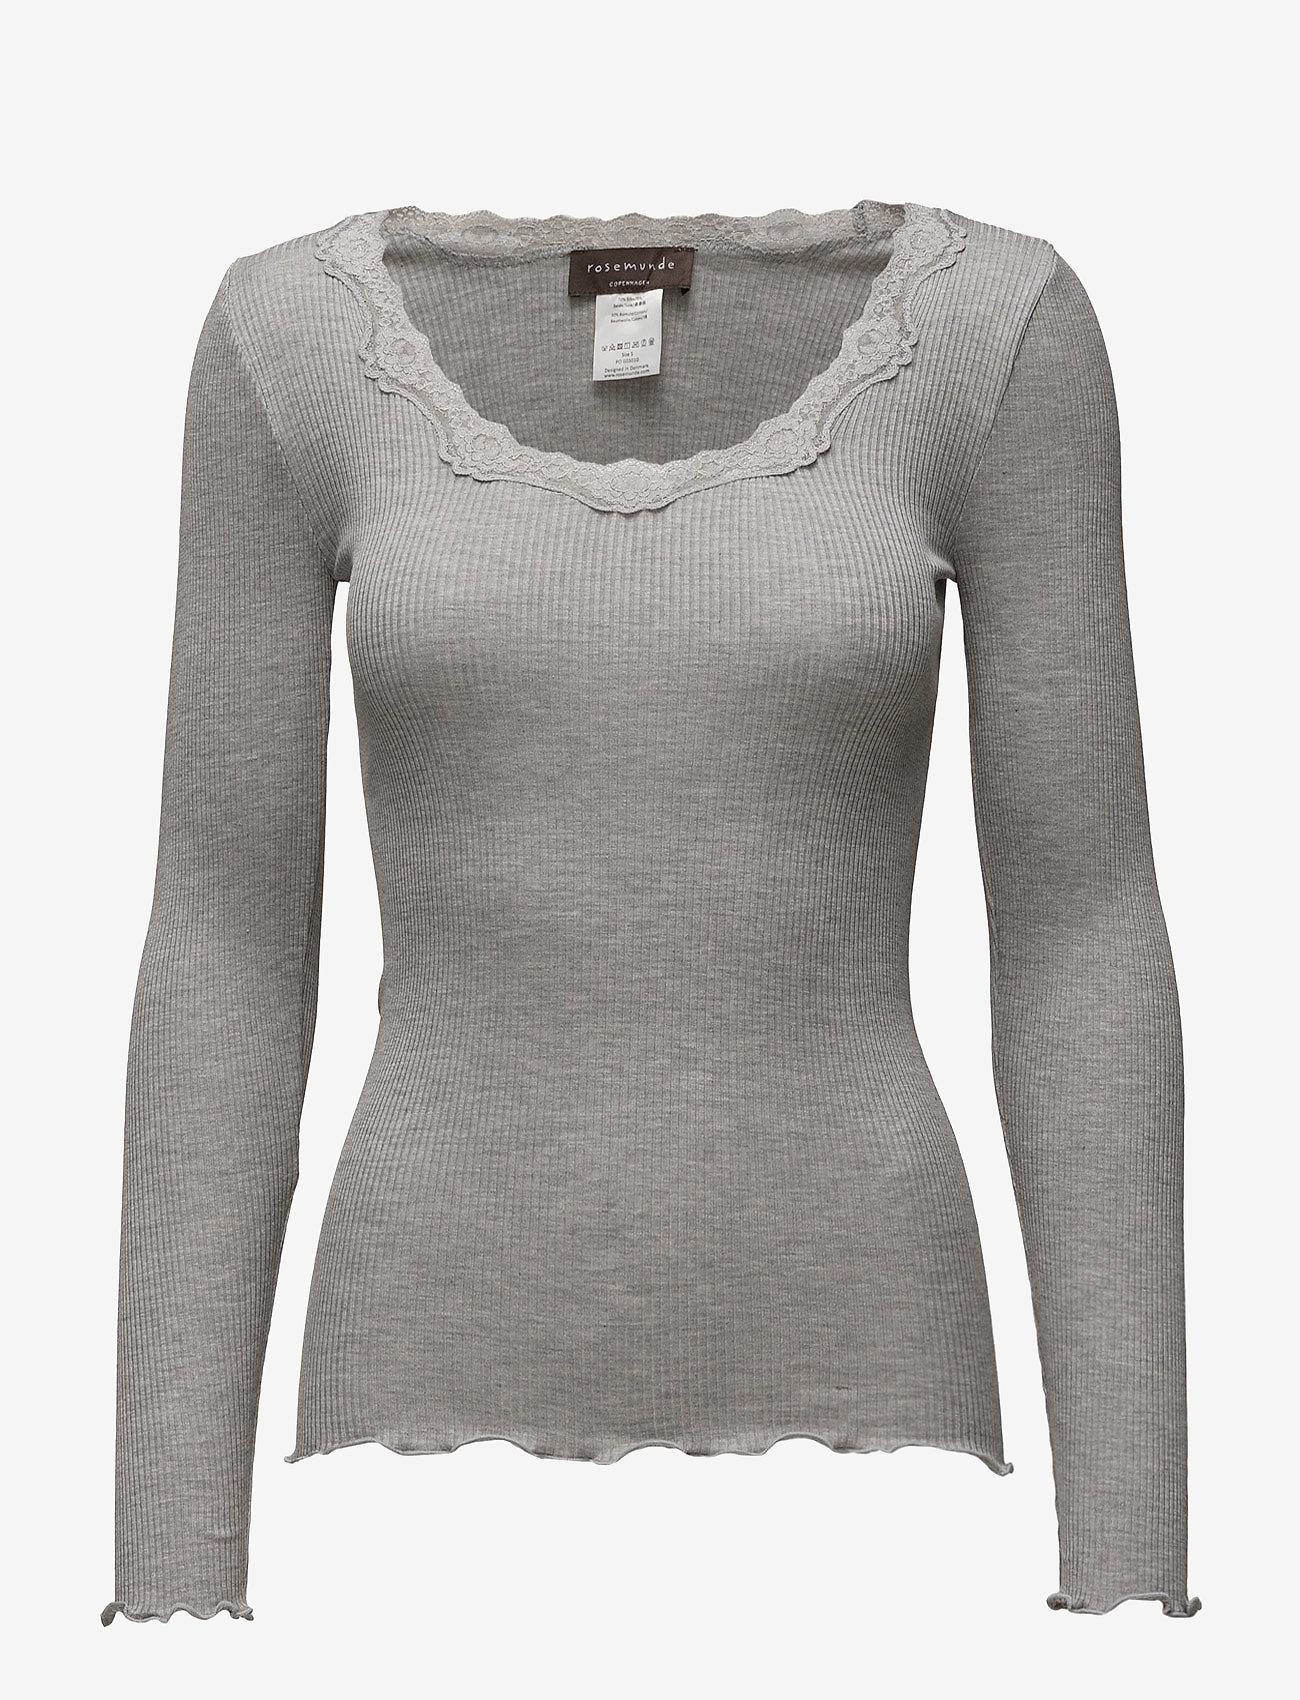 Rosemunde - Silk t-shirt w/ lace - långärmade toppar - light grey melange - 0